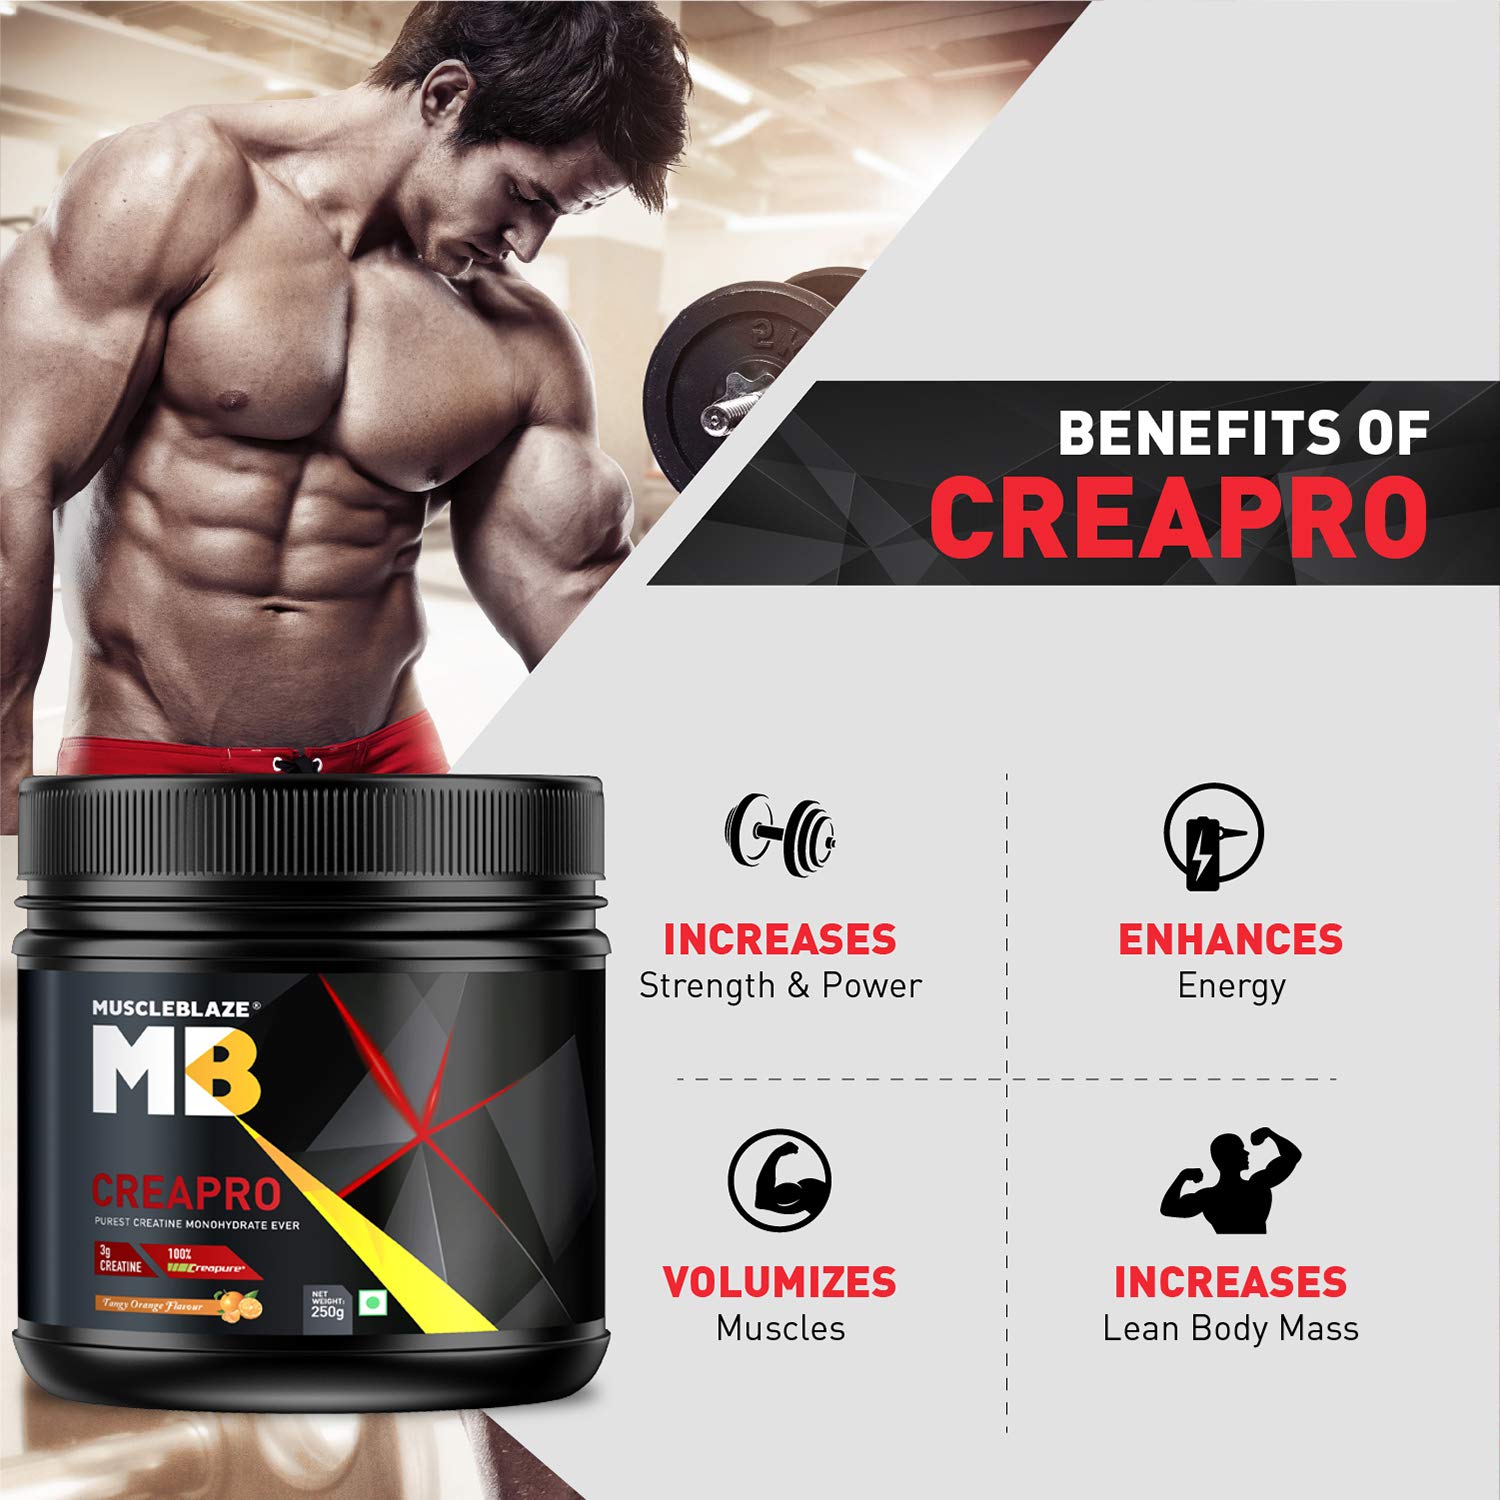 Image Of Muscleblaze Creapro With Creapure Beast Nutrition